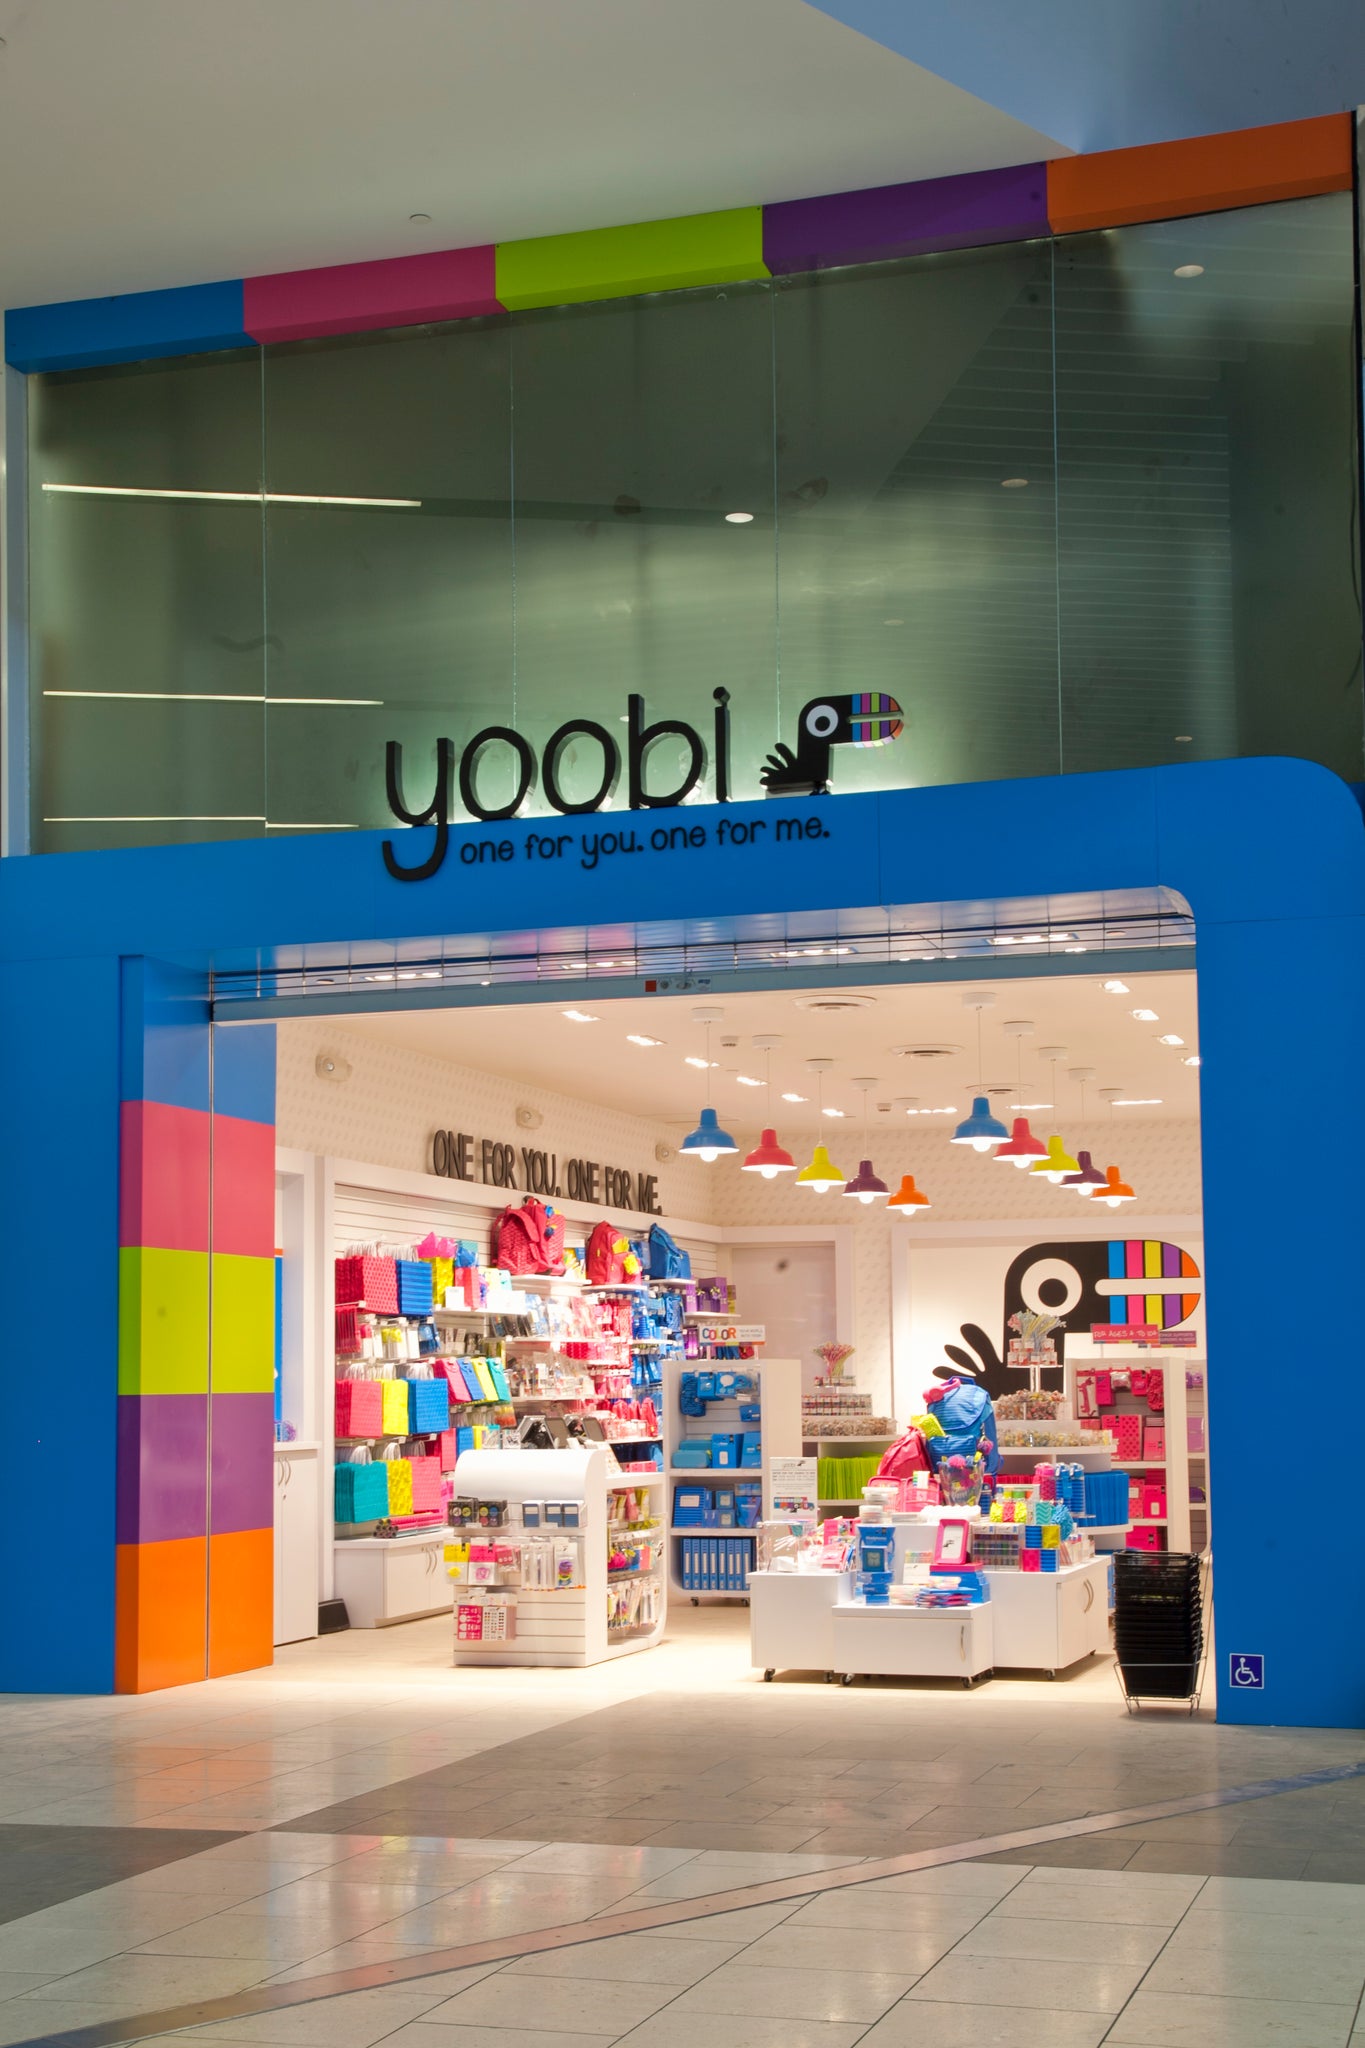 Welcome to the Yoobi Retail Store!